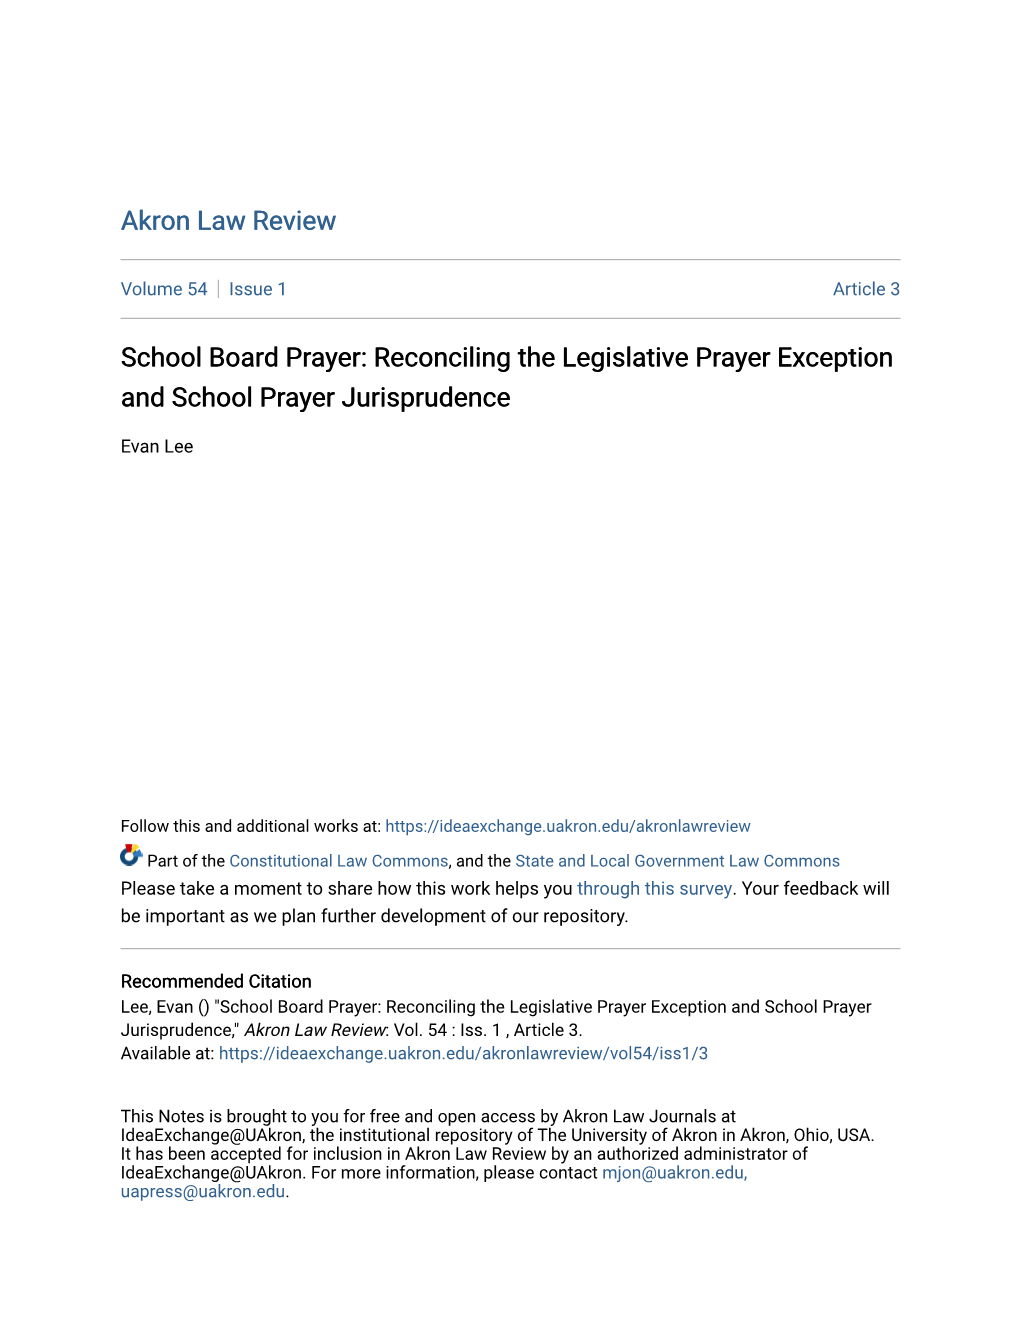 School Board Prayer: Reconciling the Legislative Prayer Exception and School Prayer Jurisprudence